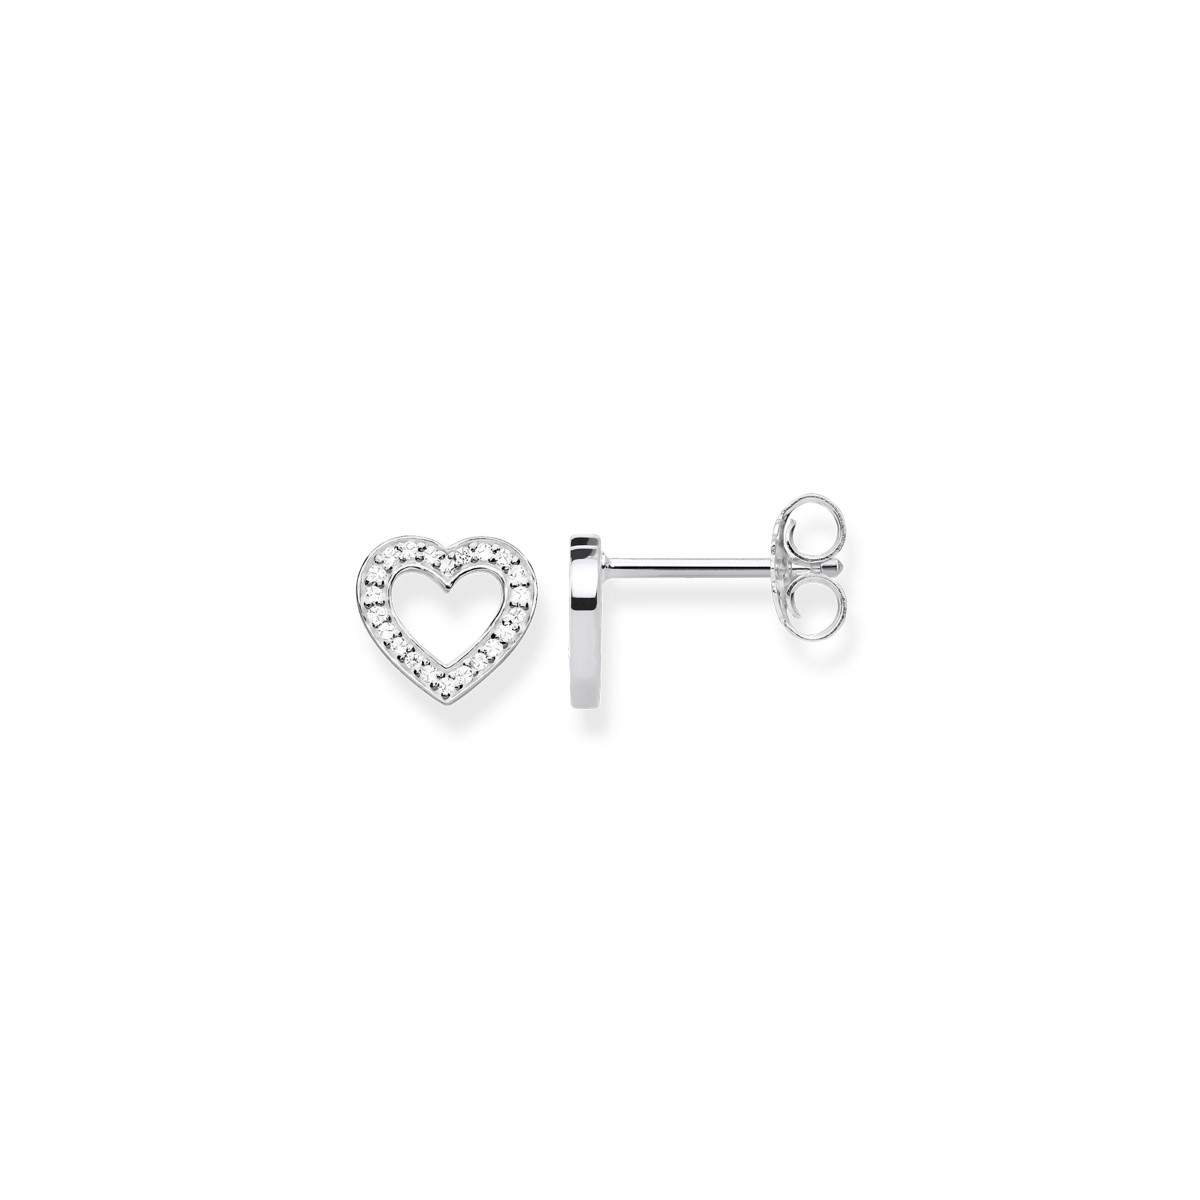 Thomas Sabo White Zirconia Open Heart Silver Earrings H1945-051-14